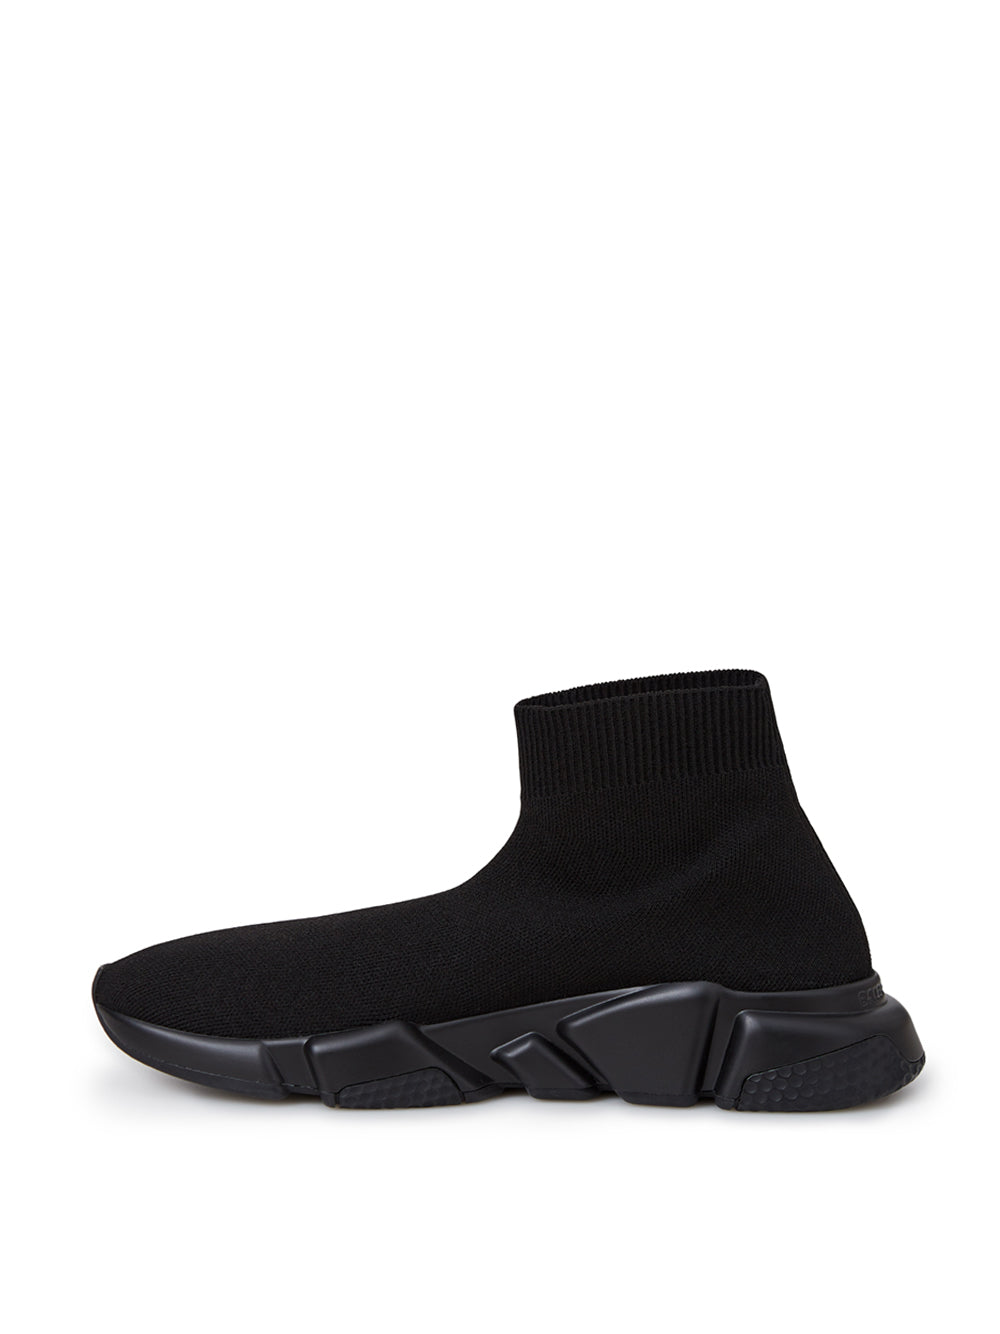 Balenciaga Black Speed Sneakers